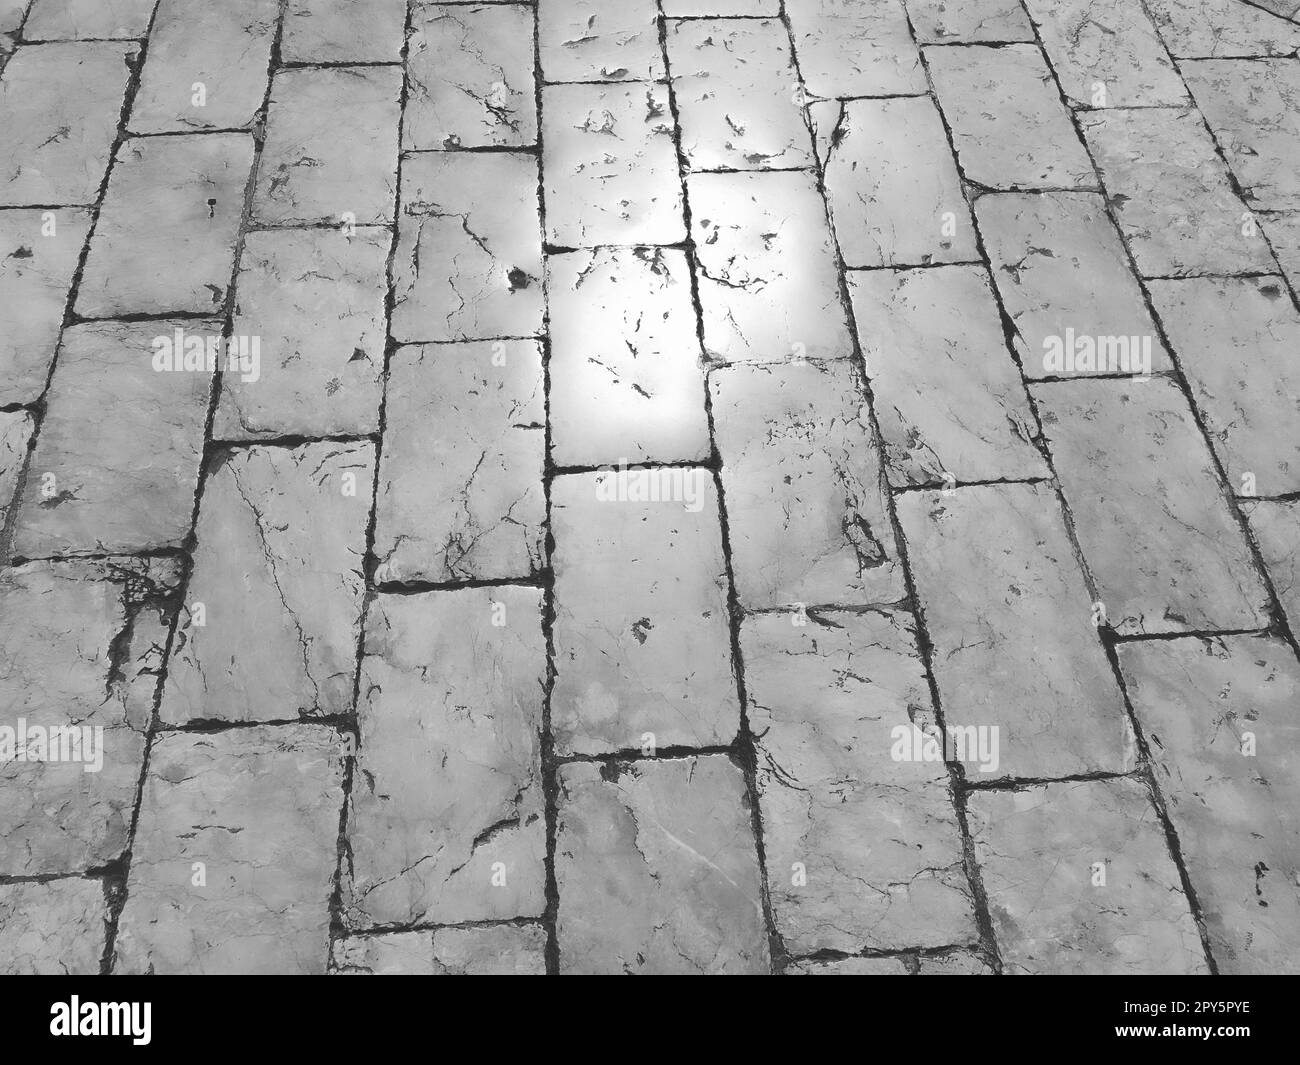 Marble floor on the street, Dubrovnik, Croatia. Antique masonry tiles rectangular blocks. Metamorphic rock composed of calcite CaCO3. Polished tiles glisten in the sun. Black and white monochrome. Stock Photo